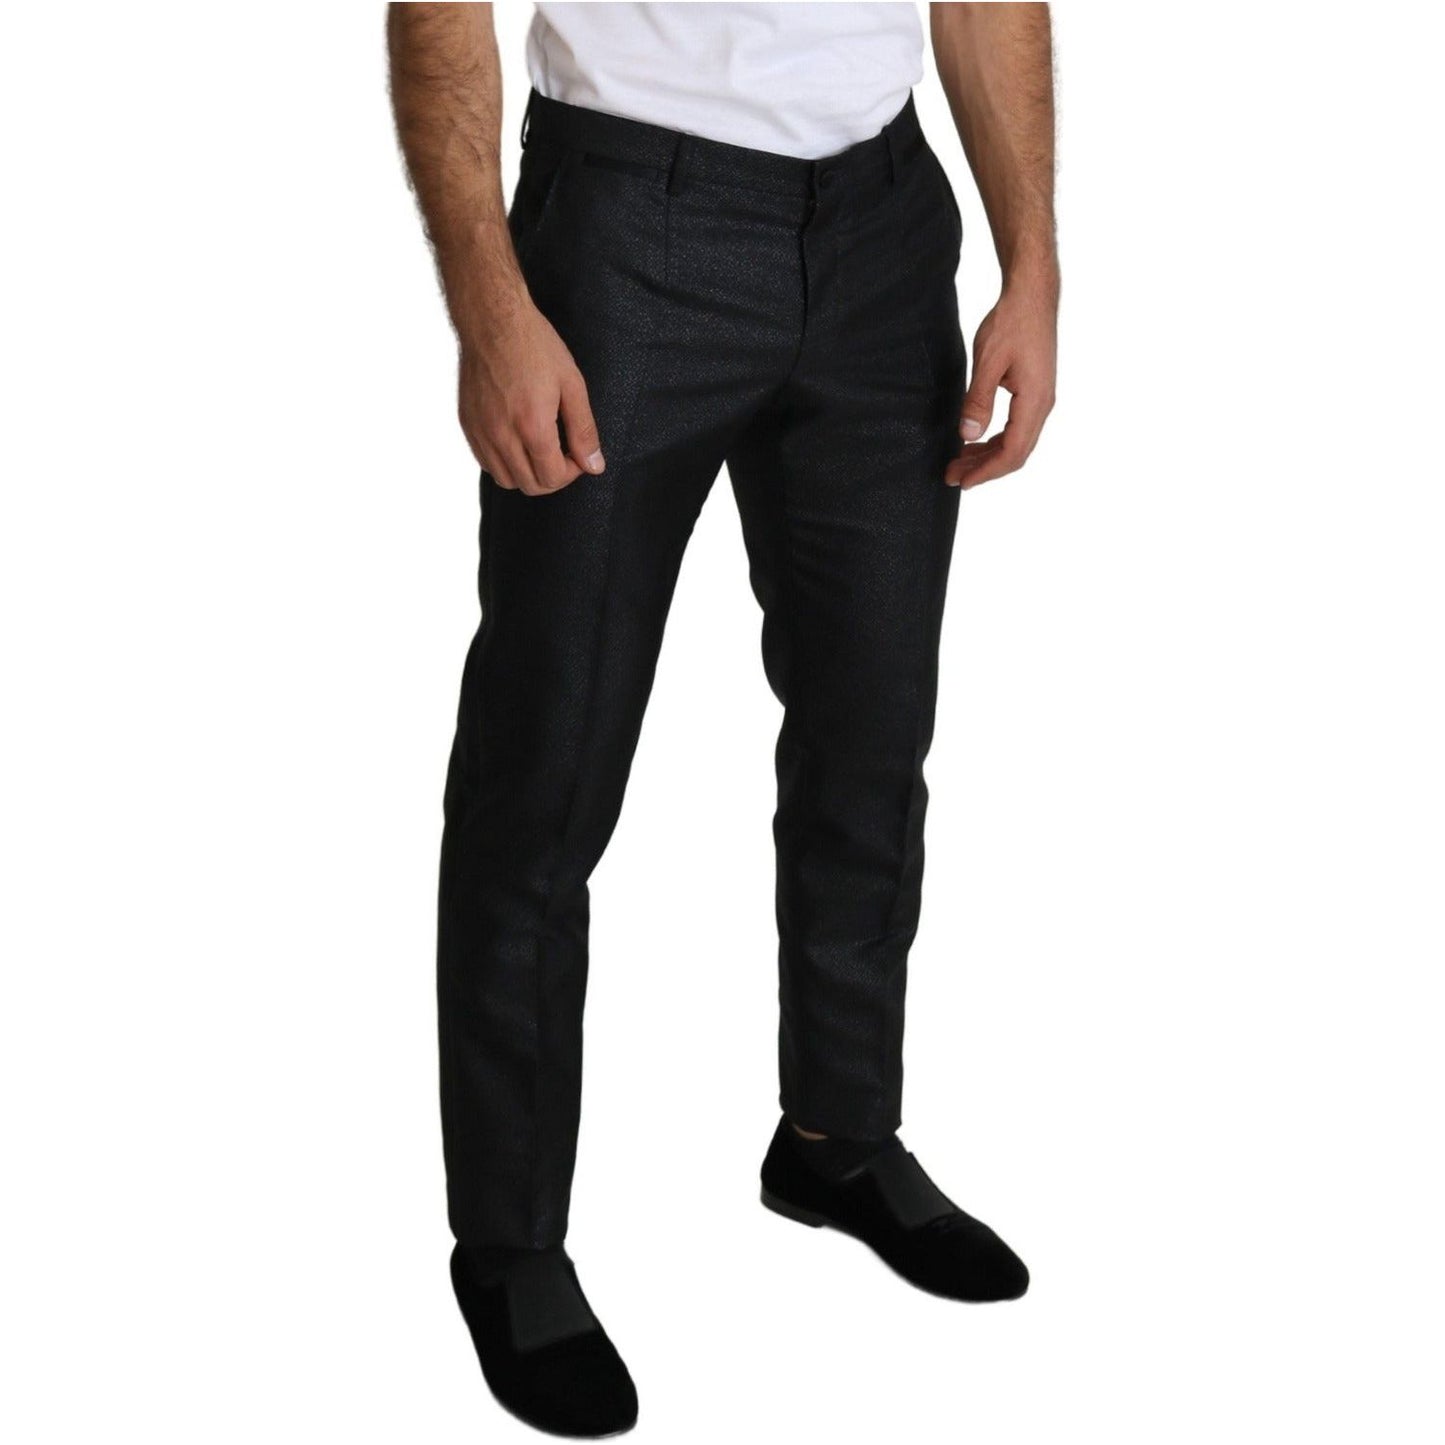 Dolce & Gabbana Elegant Metallic Black Dress Pants black-metallic-skinny-trouser-dress Jeans & Pants IMG_2241-c9e88a0d-be7.jpg